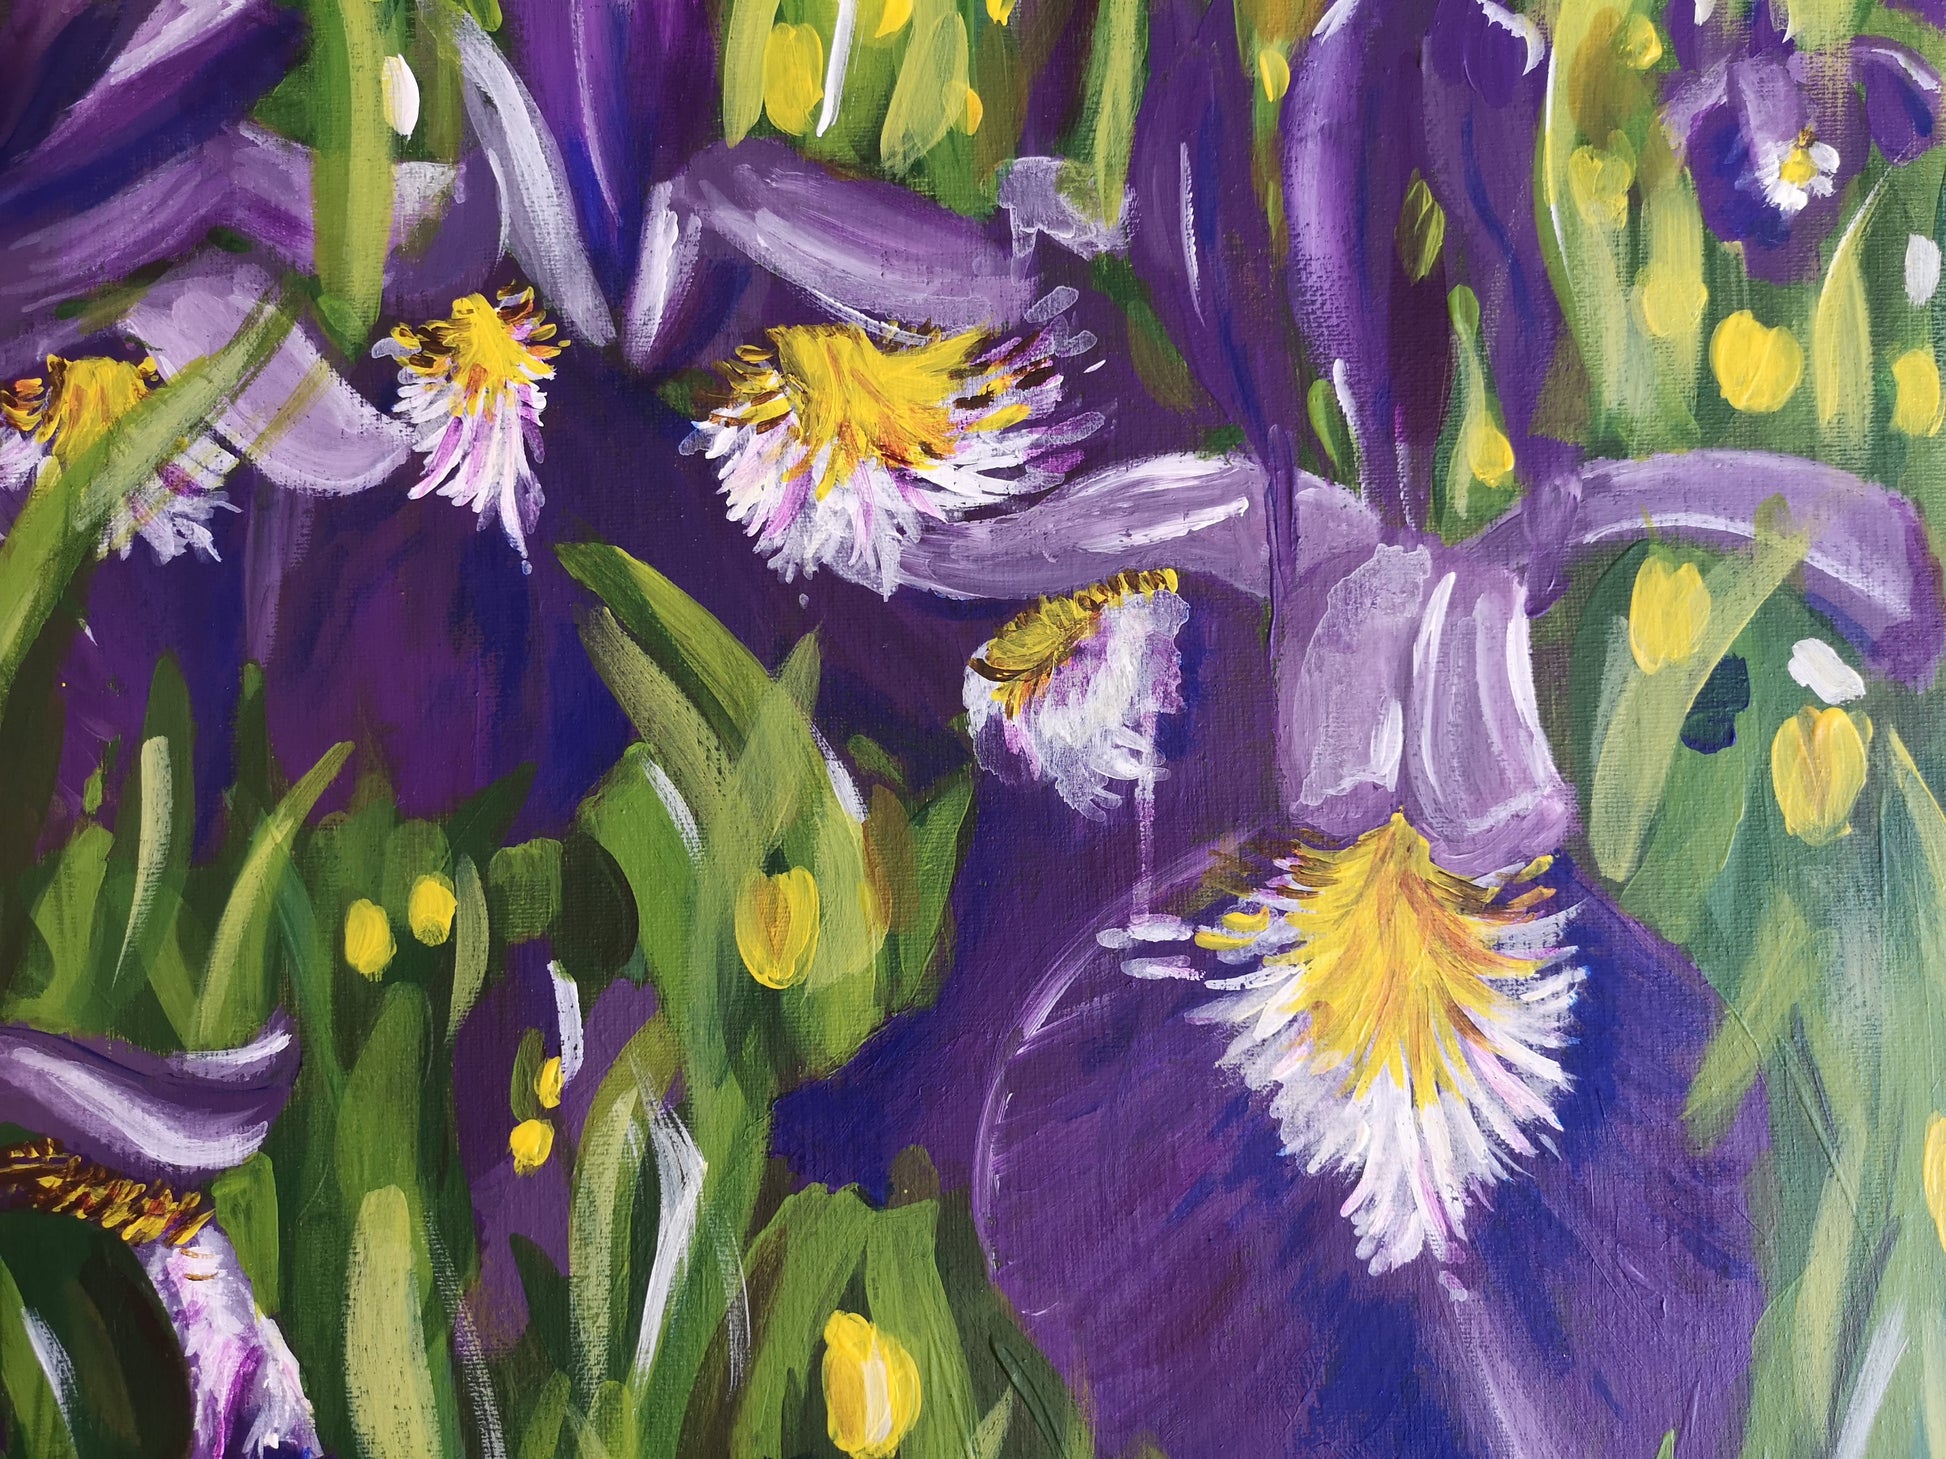 Details, close up, brush strokes, floral, flowers Acrylic Painting Iris Field Landscape, abstract art, purple, green, yellow, white paint, judy century, original art print